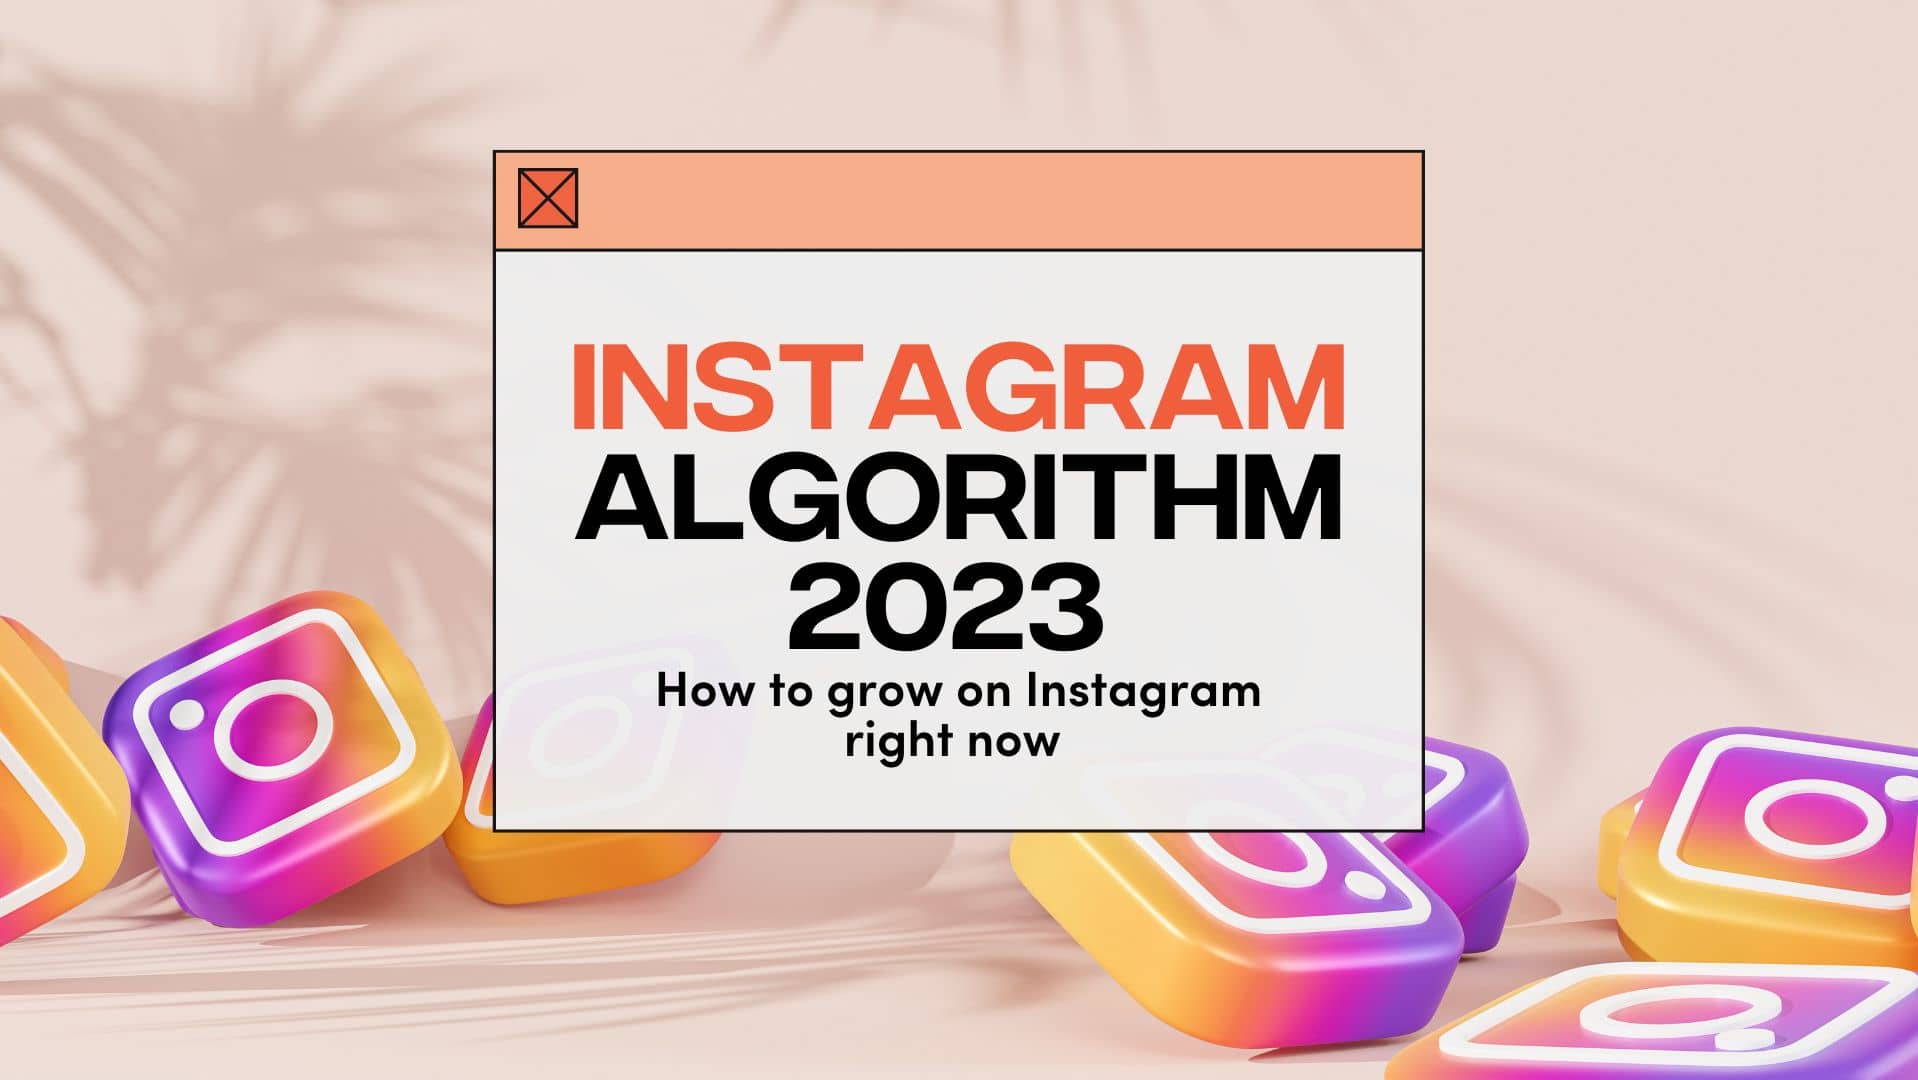 Instagram Algorithm 2023 How To Grow on Instagram Right Now